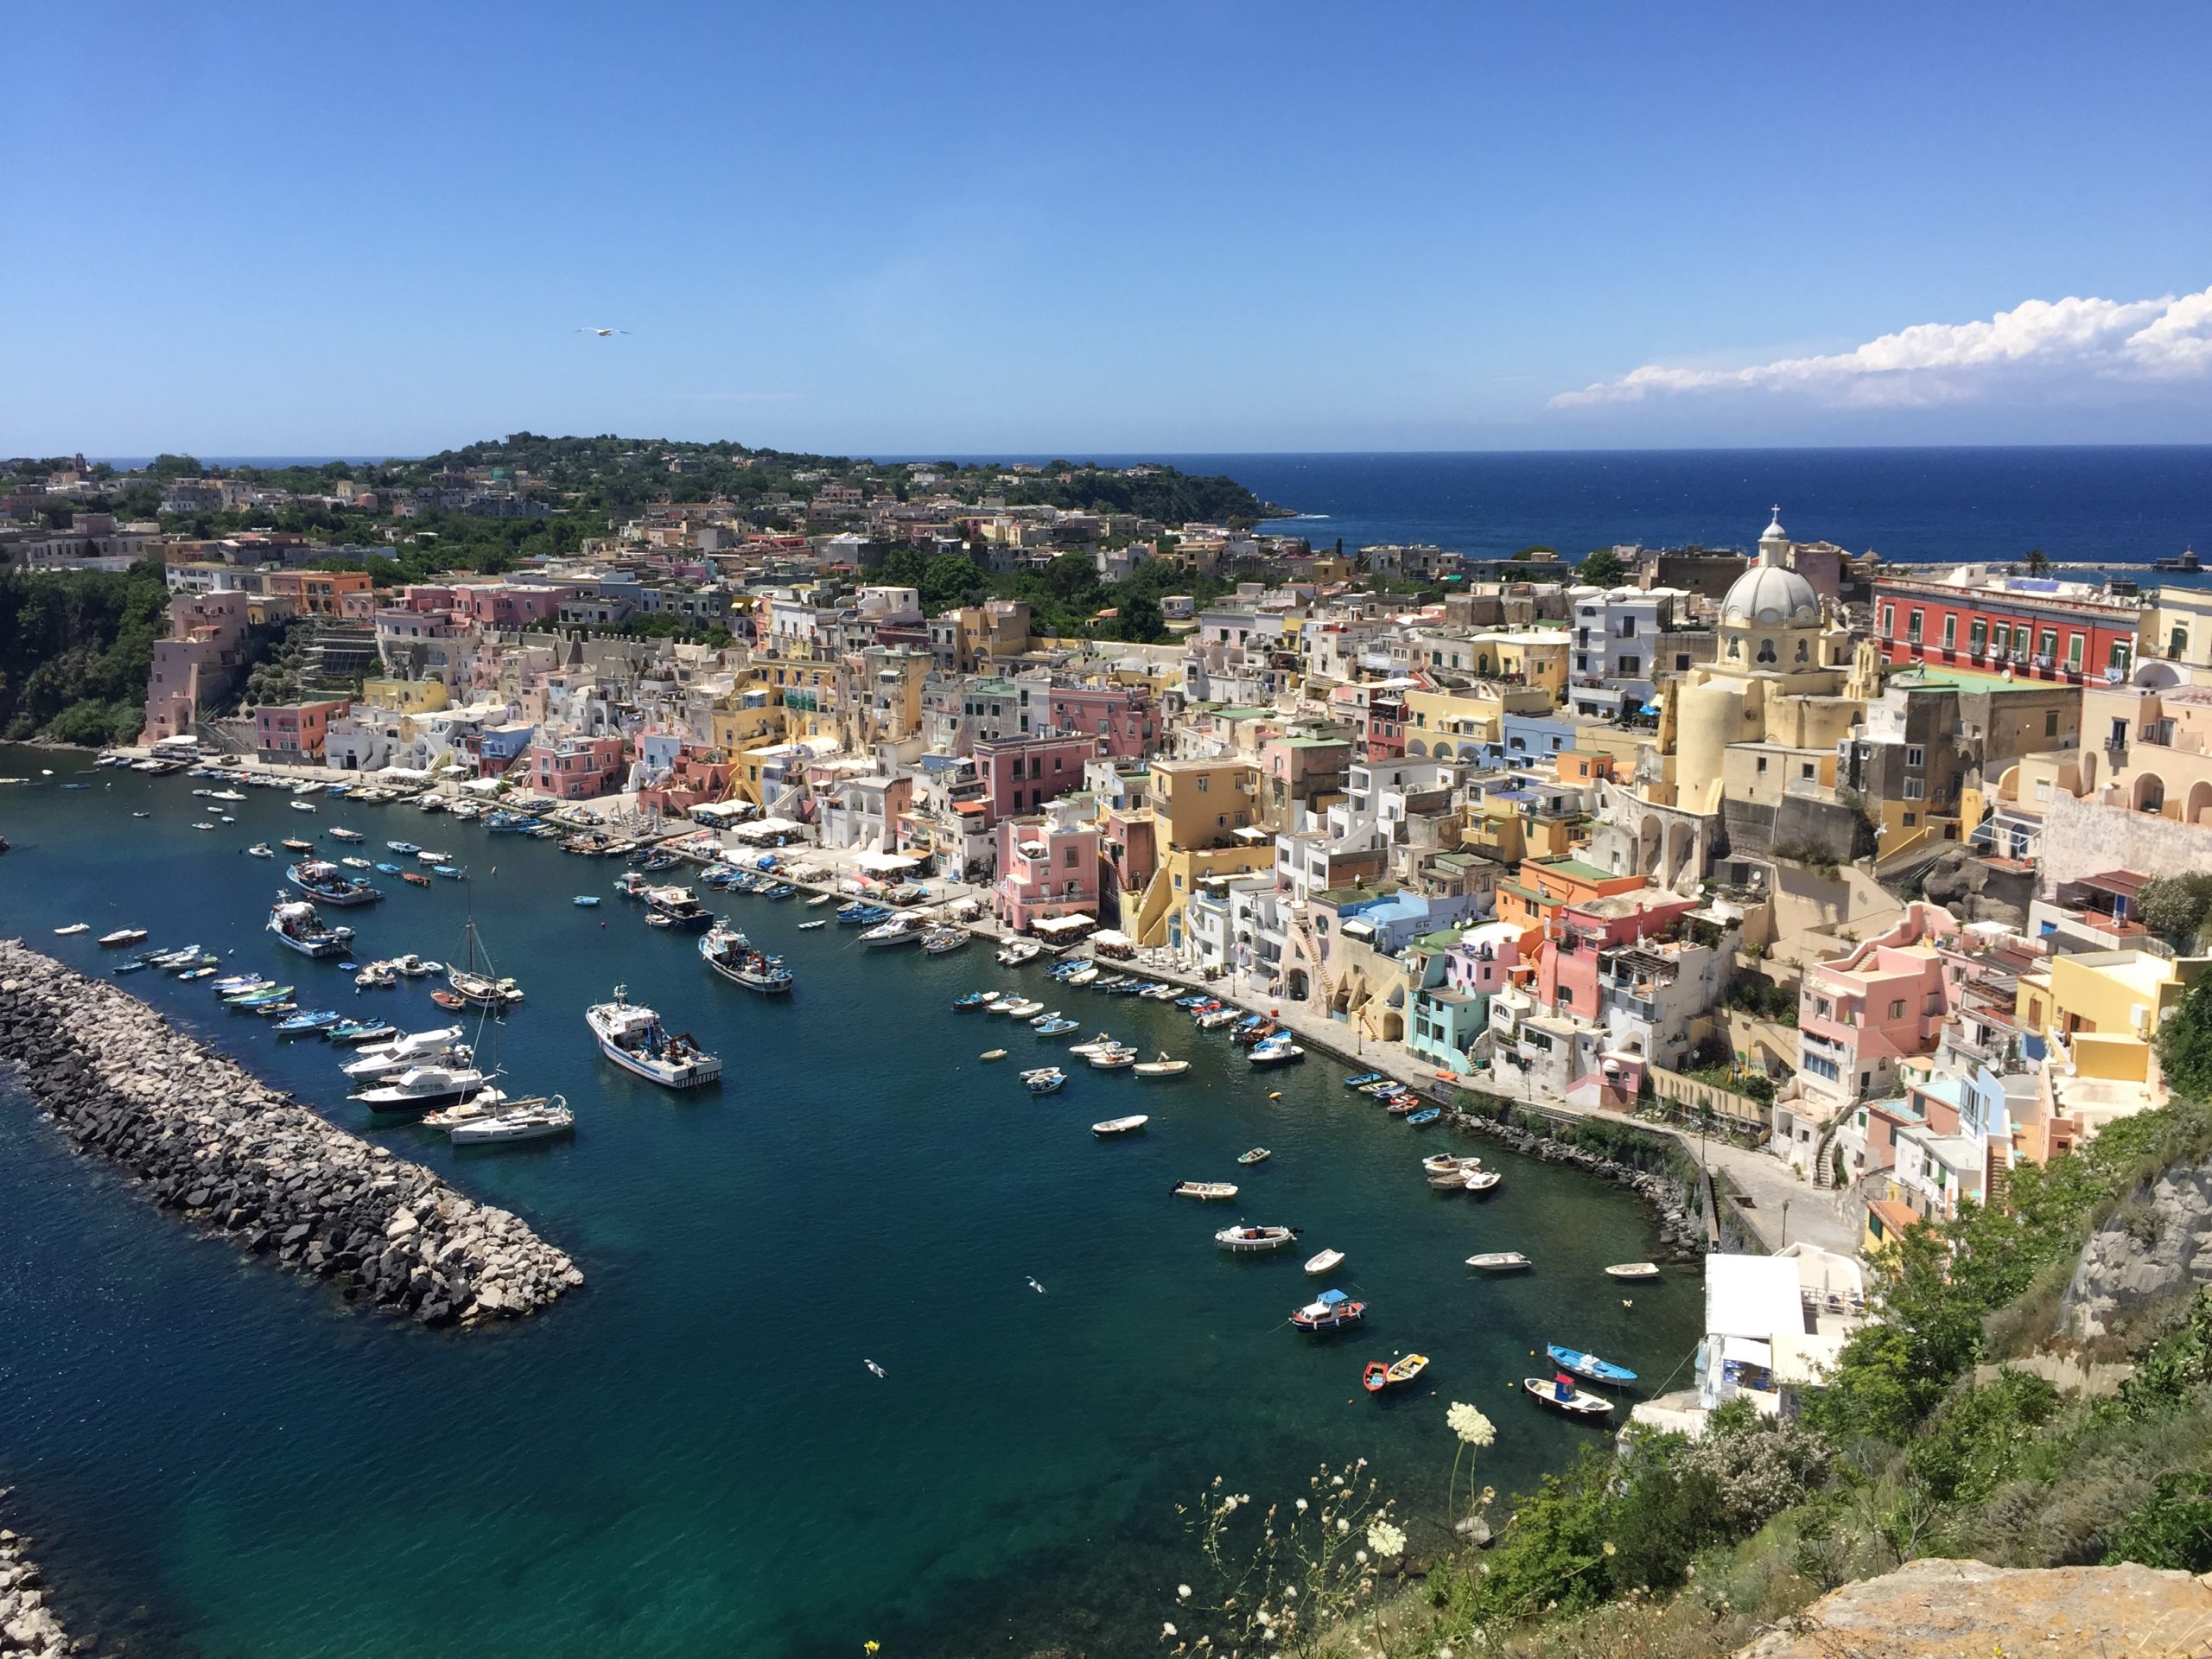 Itália reaberta: experiências exclusivas para curtir a “dolce vita”